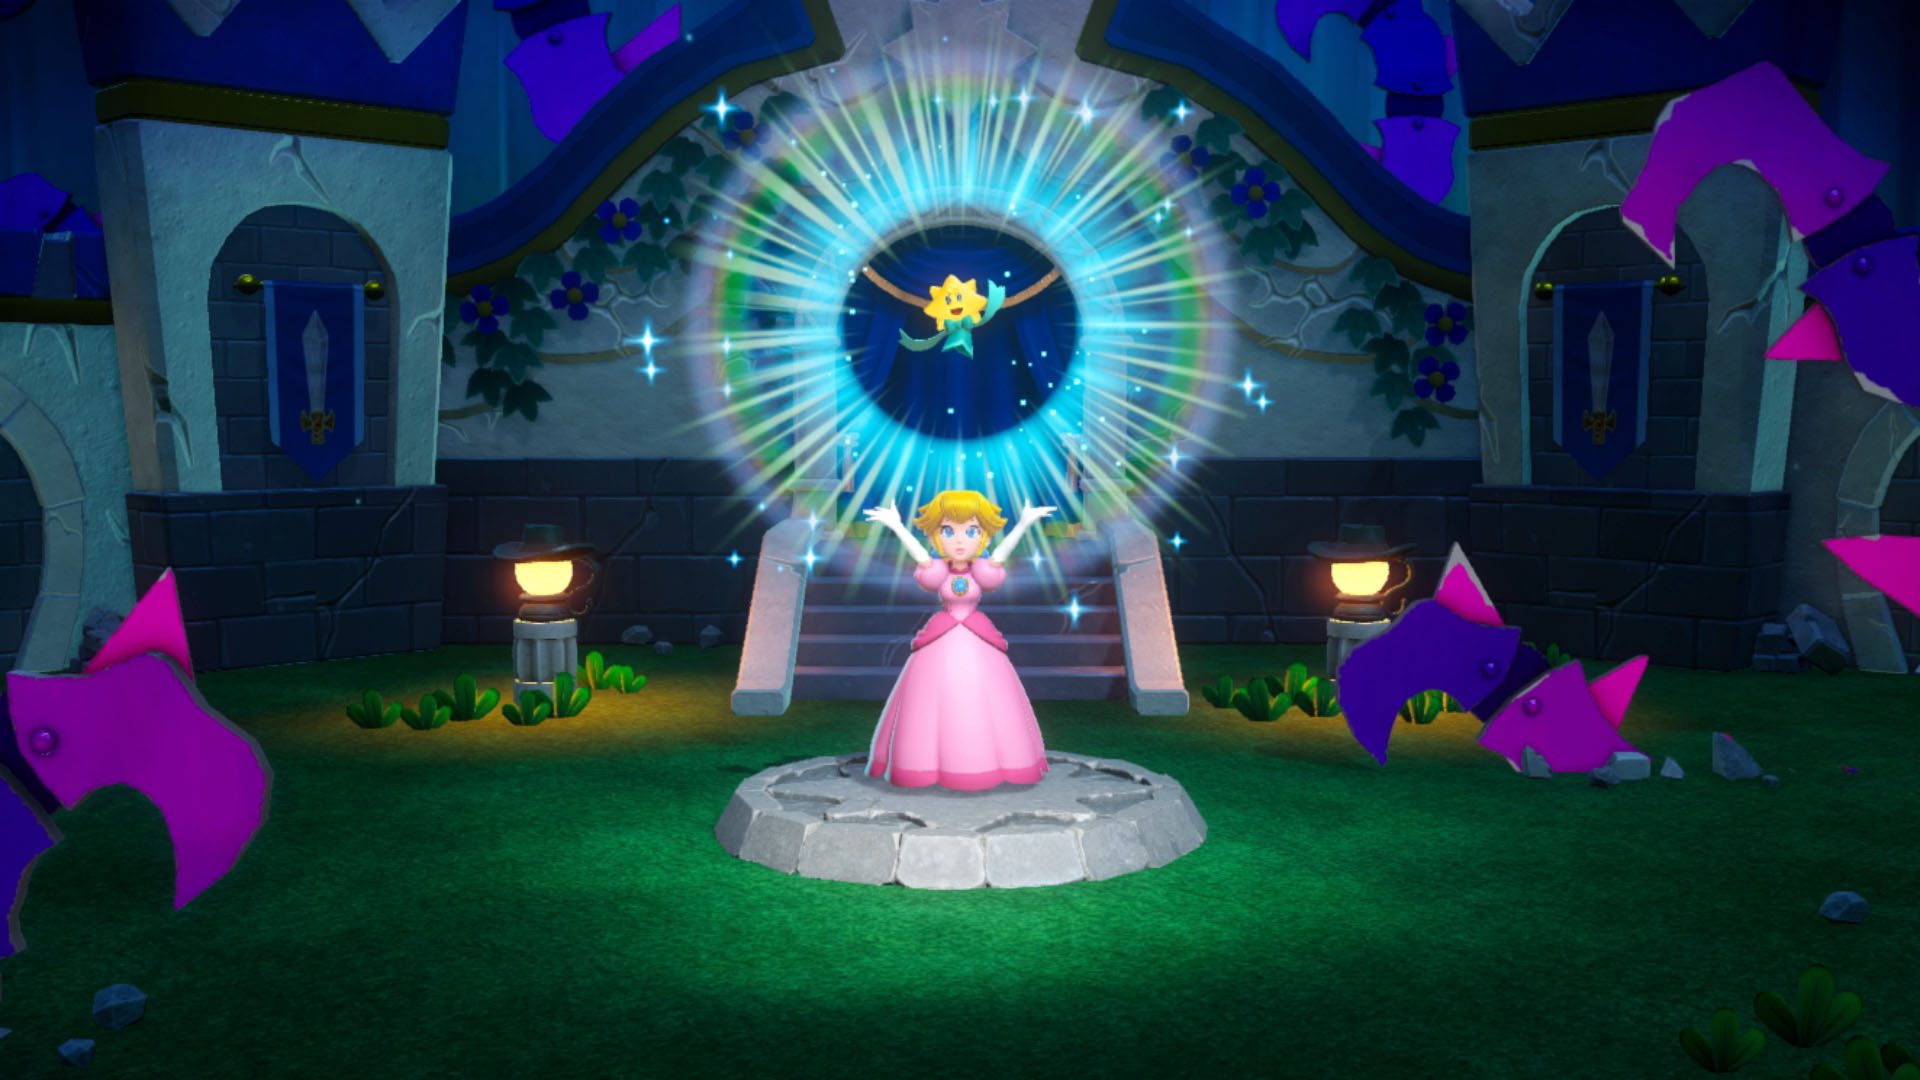 Nintendo has revealed a new game starring Princess Peach VGC